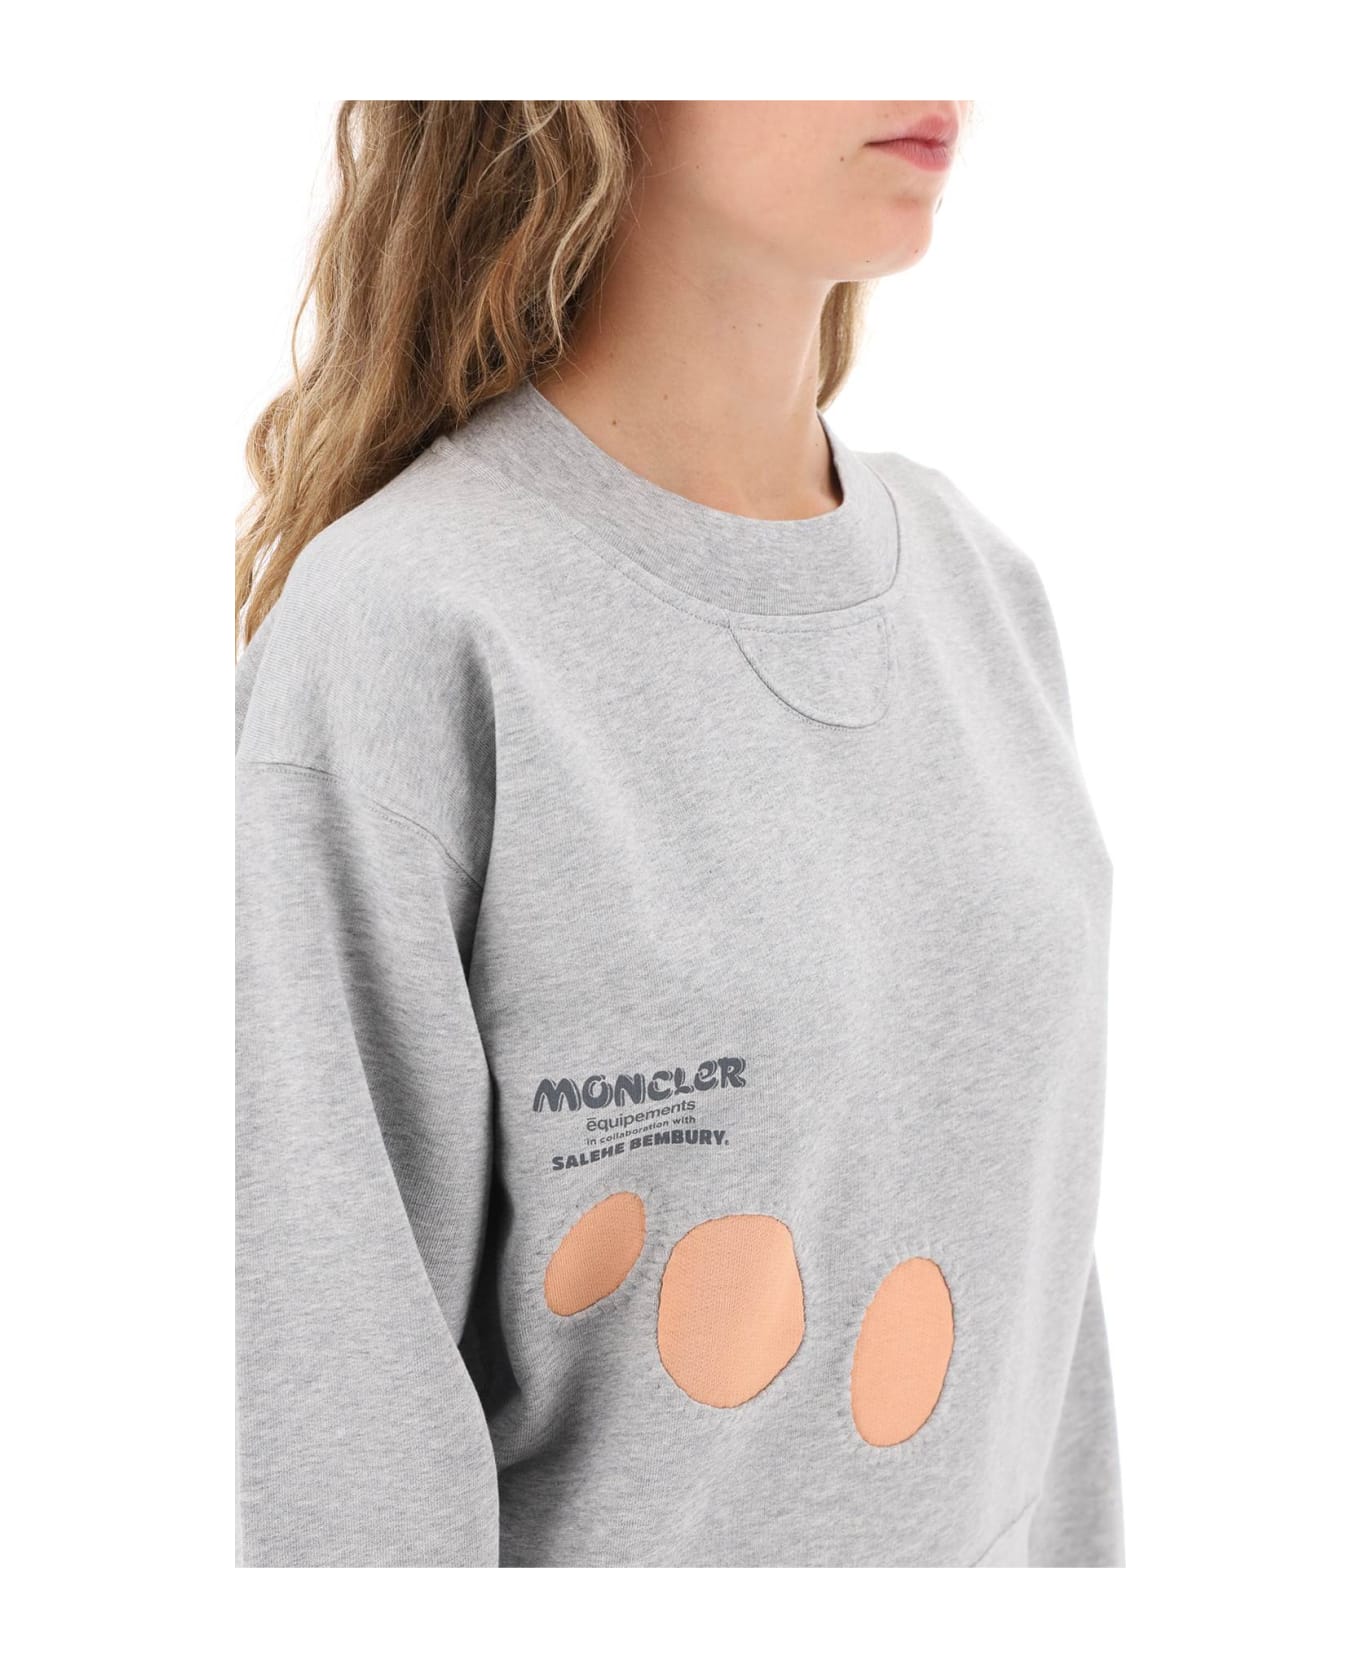 Moncler Genius X Salehe Bembury Sweatshirt - Grey フリース